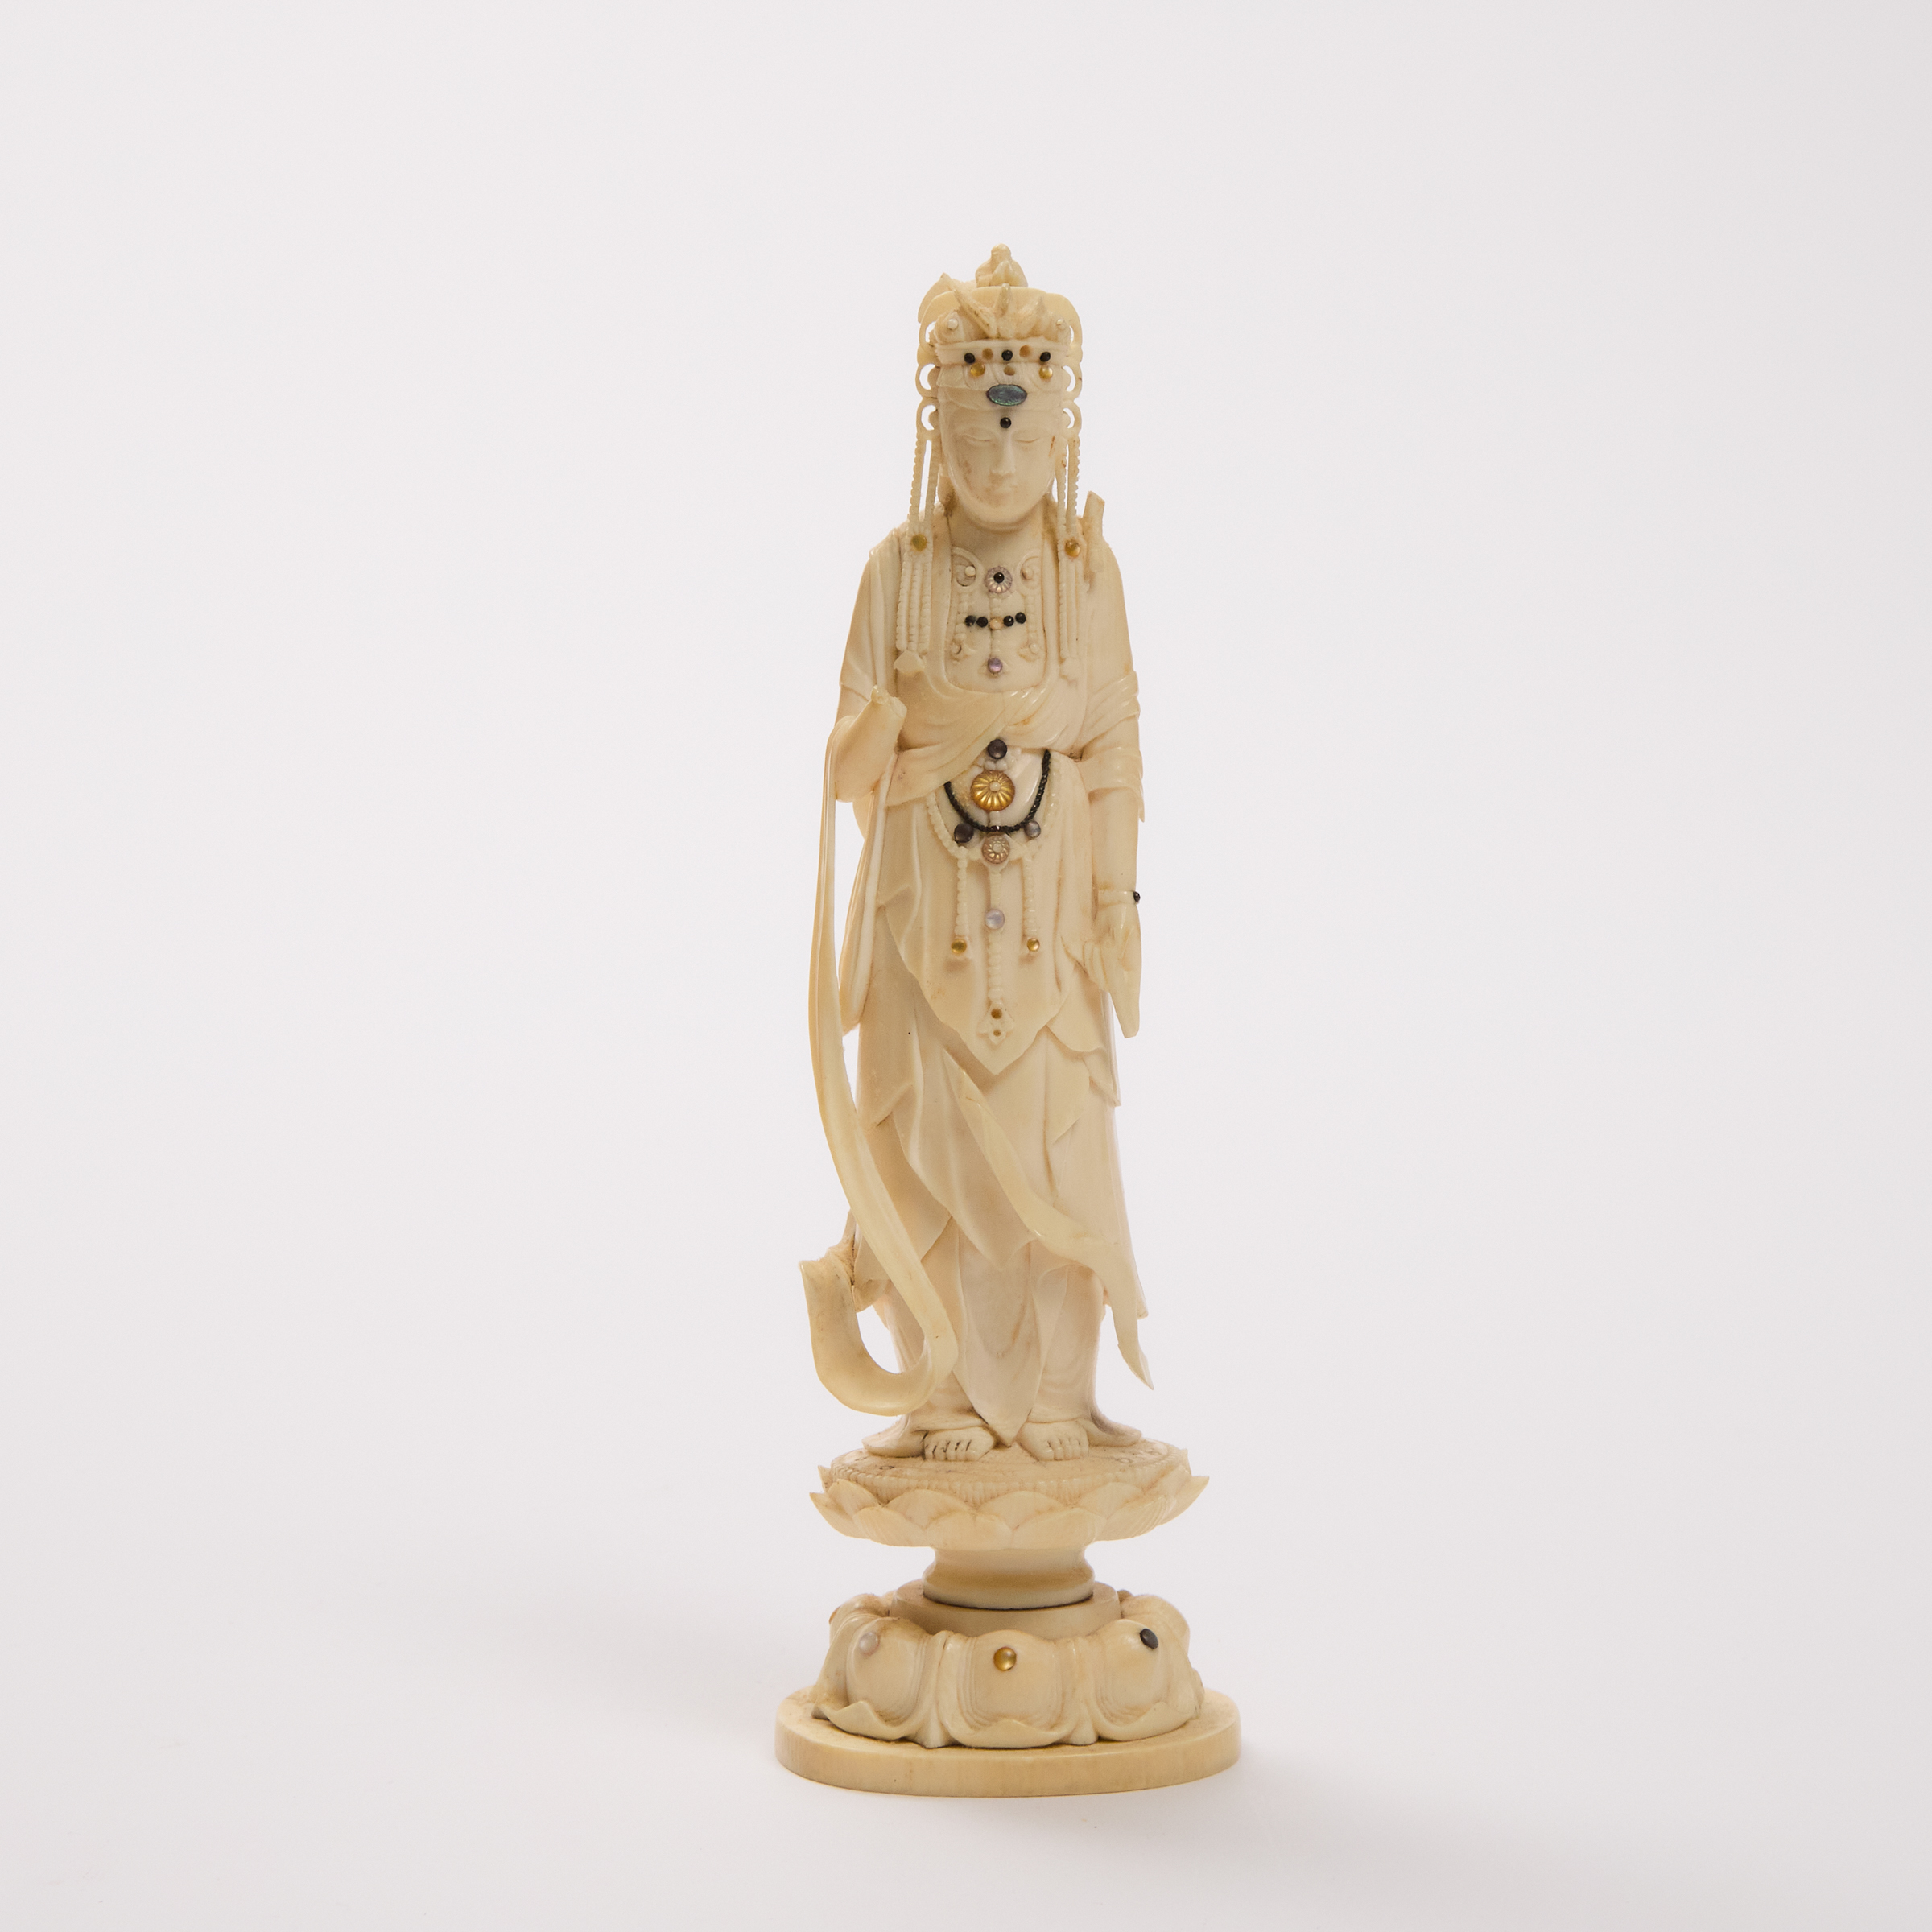 A Shibayama-Inlaid Ivory Figure